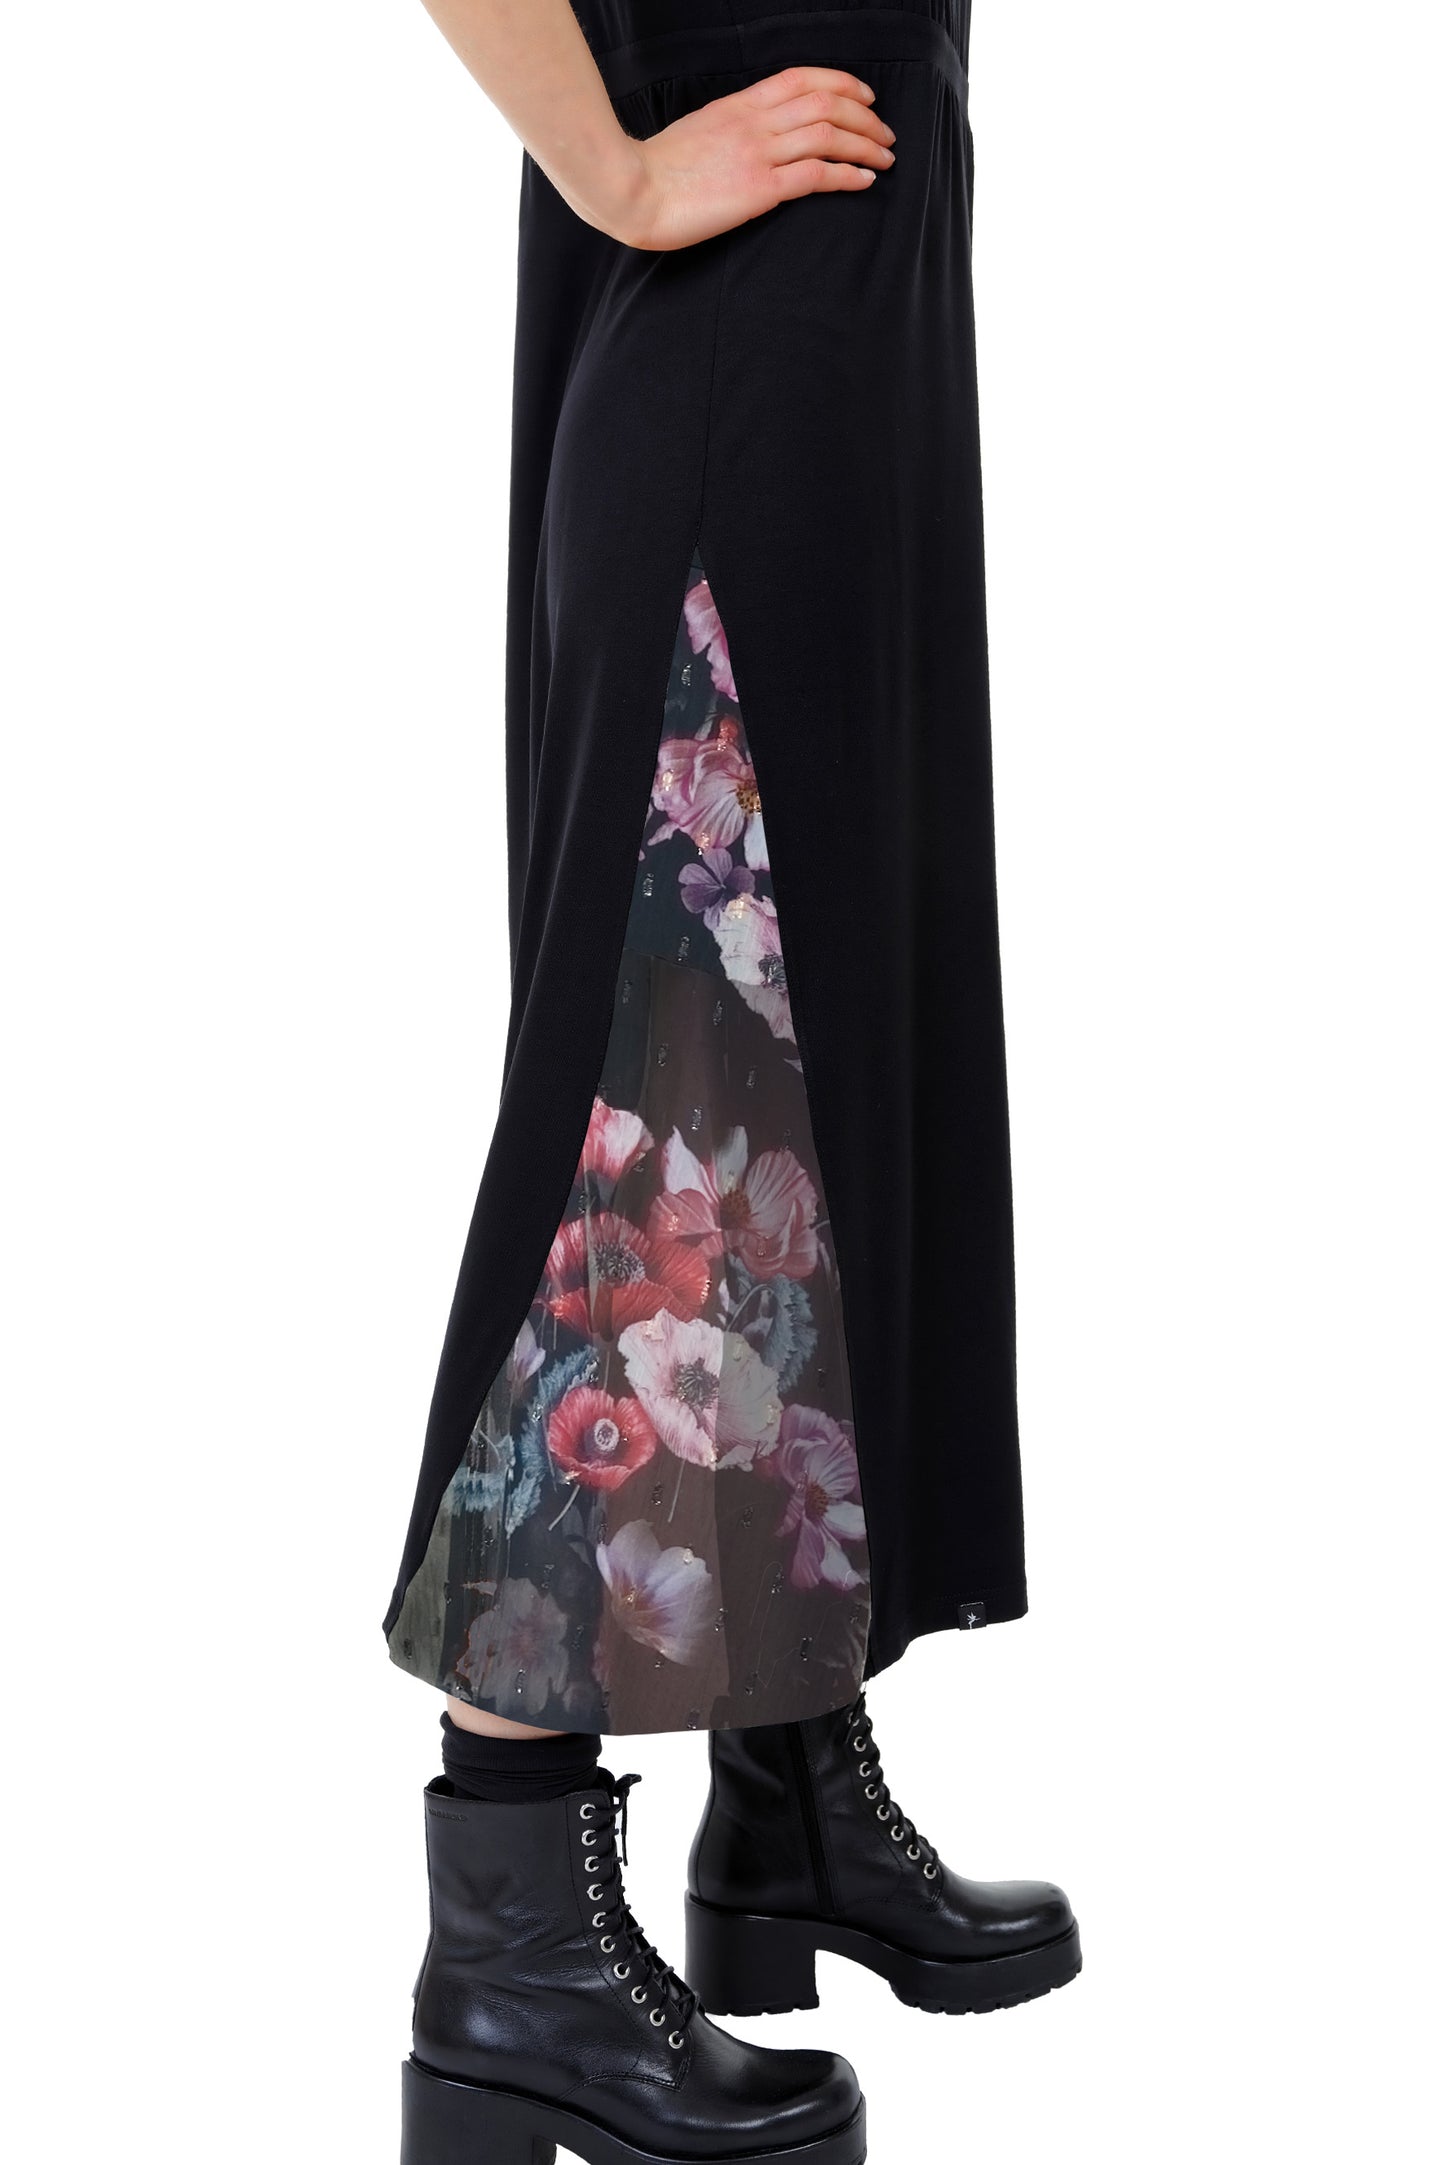 Magic Maxi Kleid schwarz blütenhauch